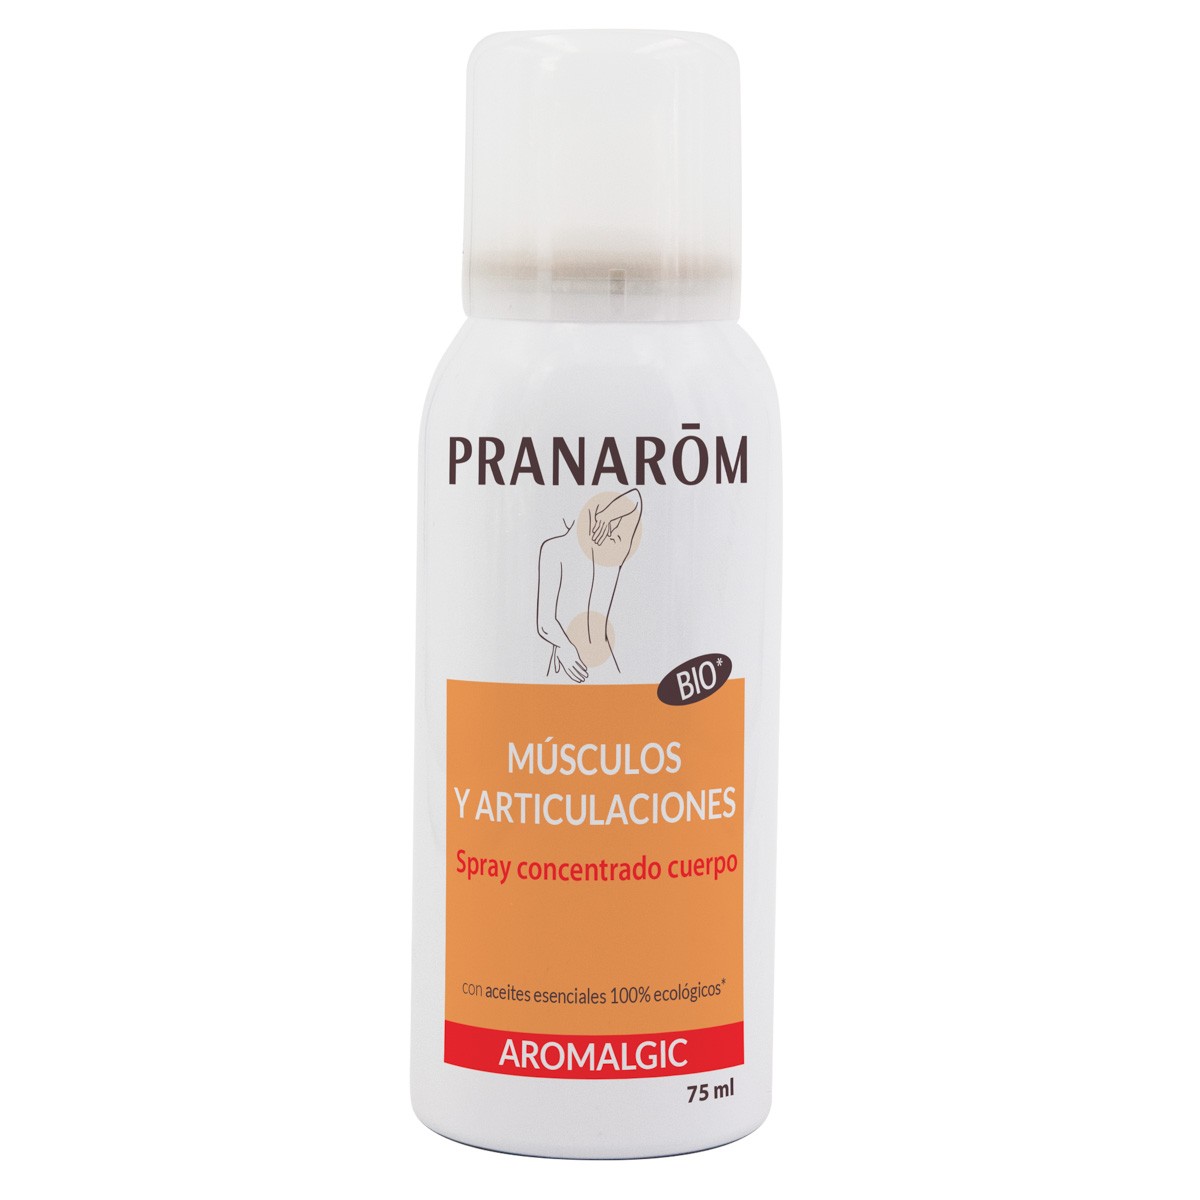 Pranarom aromalgic Spray concentrado cuerpo 75 ml
